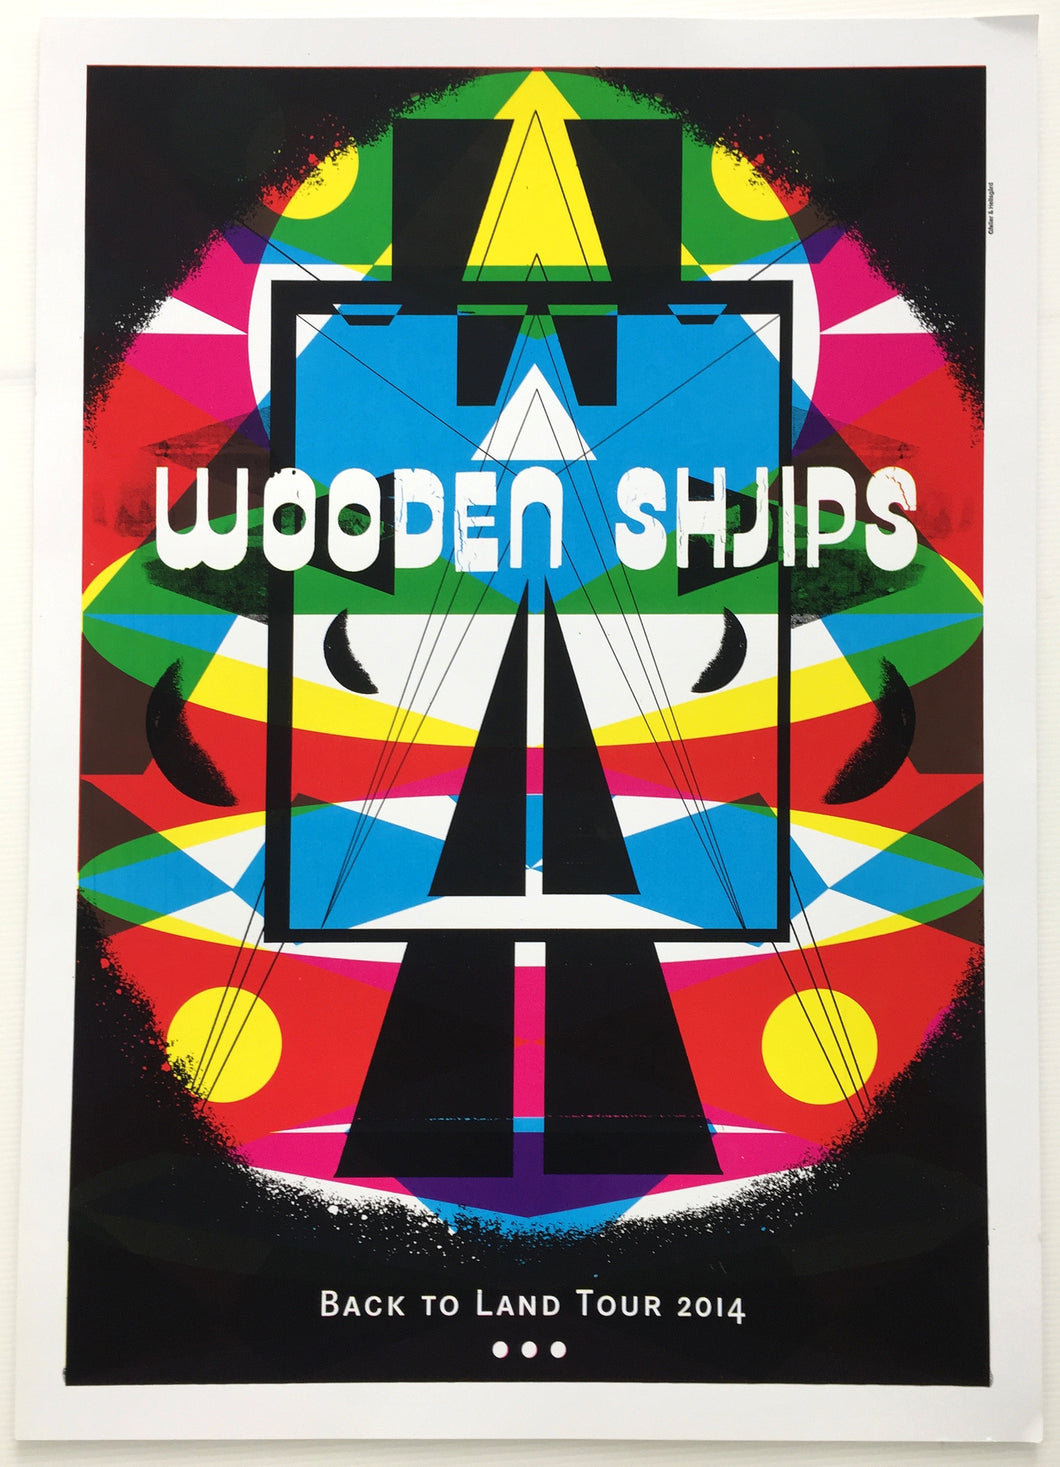 Wooden Shjips | Gfeller & Hellsgård (2014)